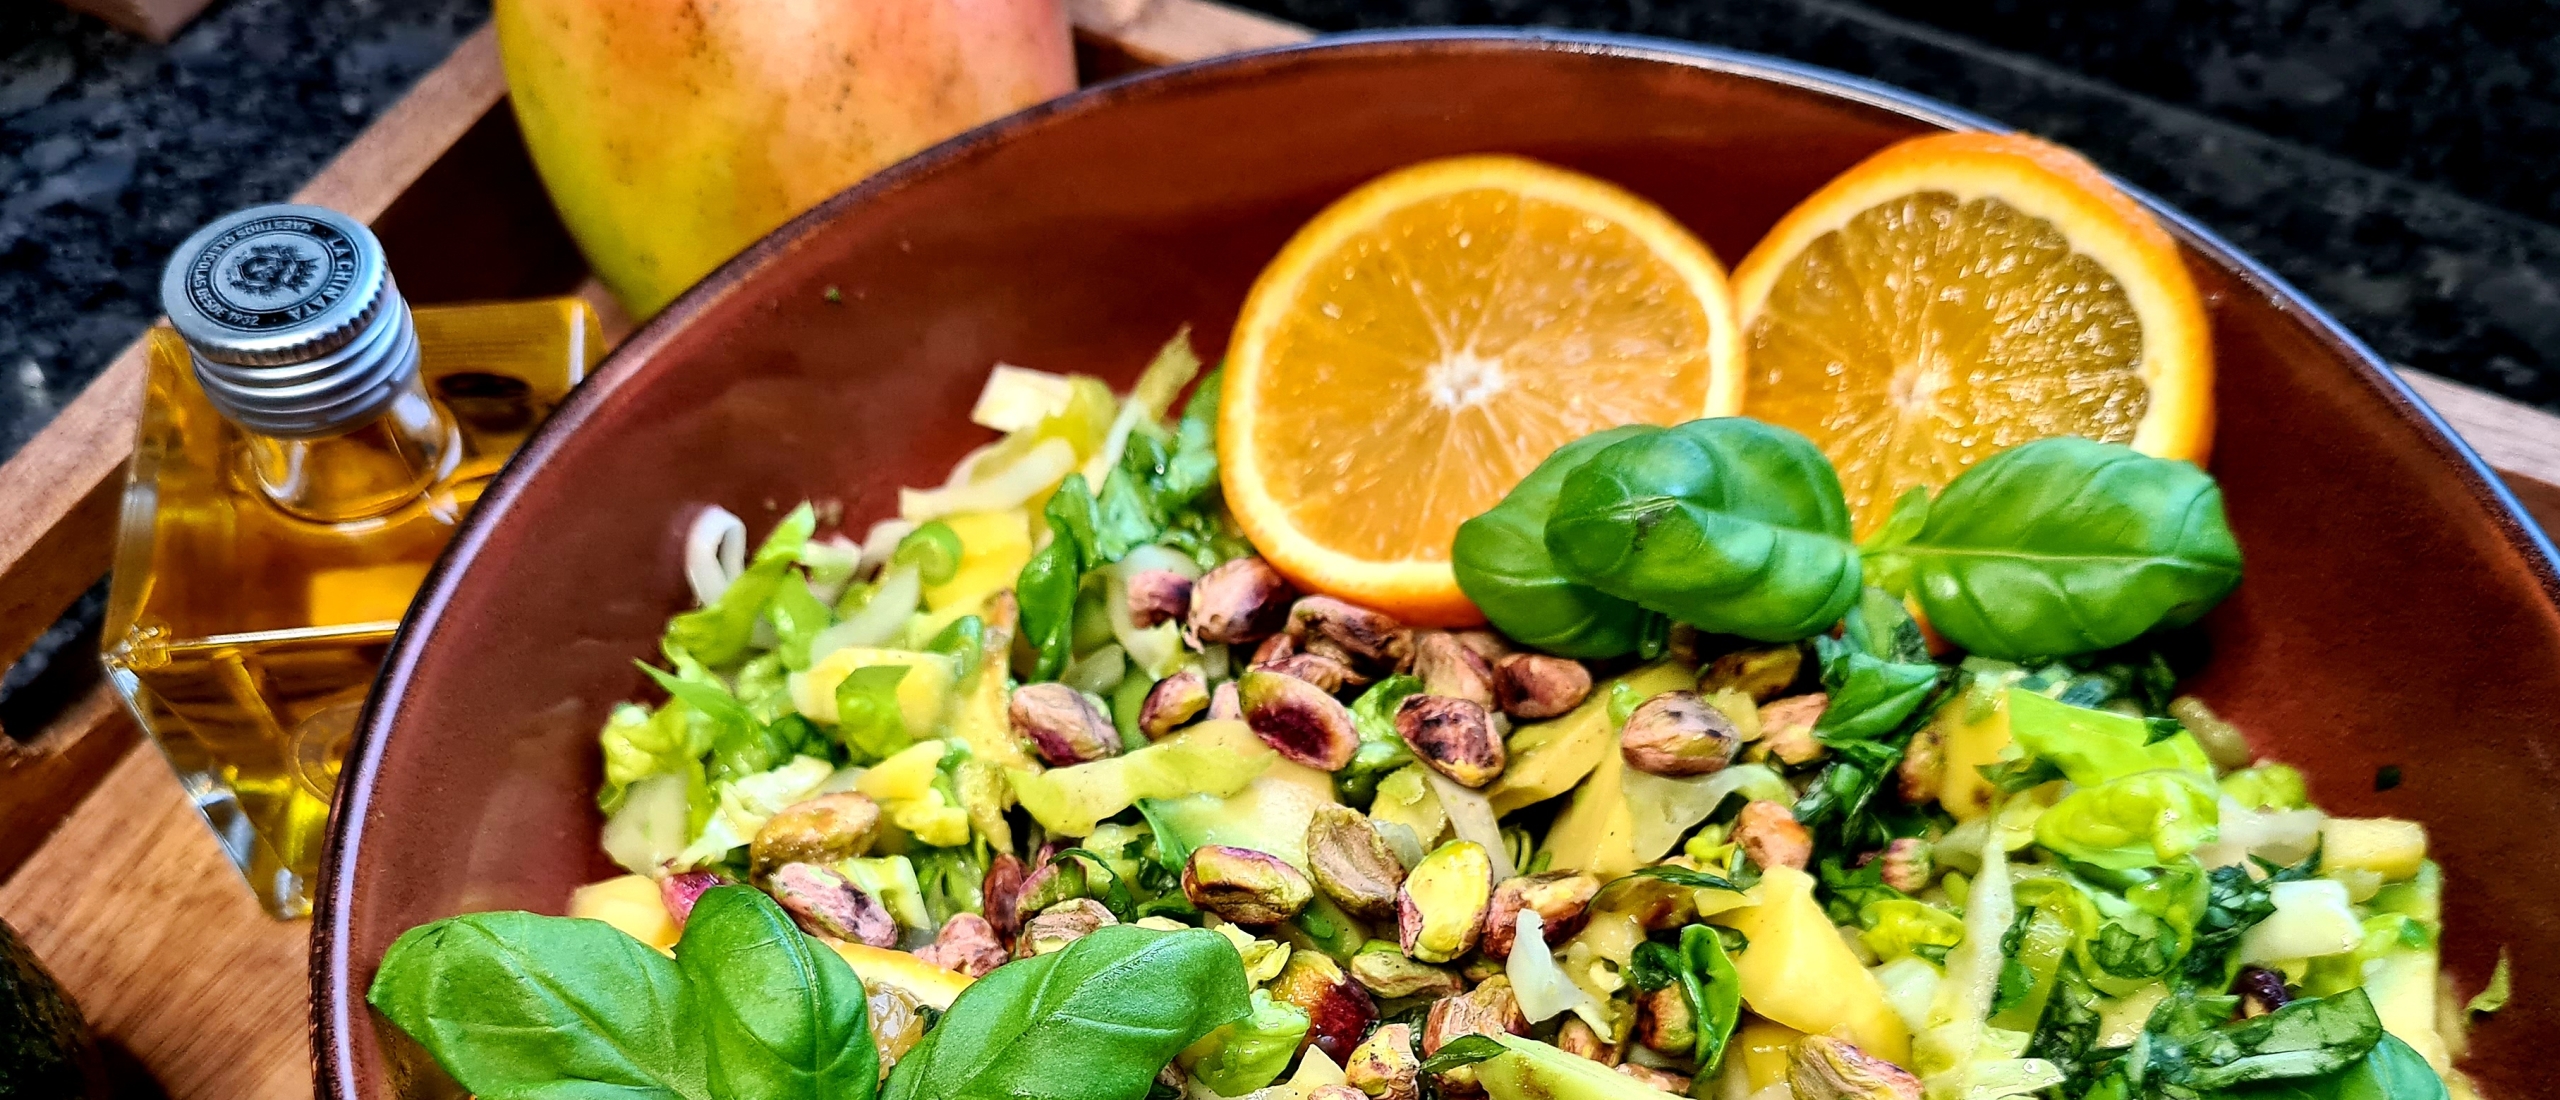 Exorfine vrij recept: Mango pistache salade